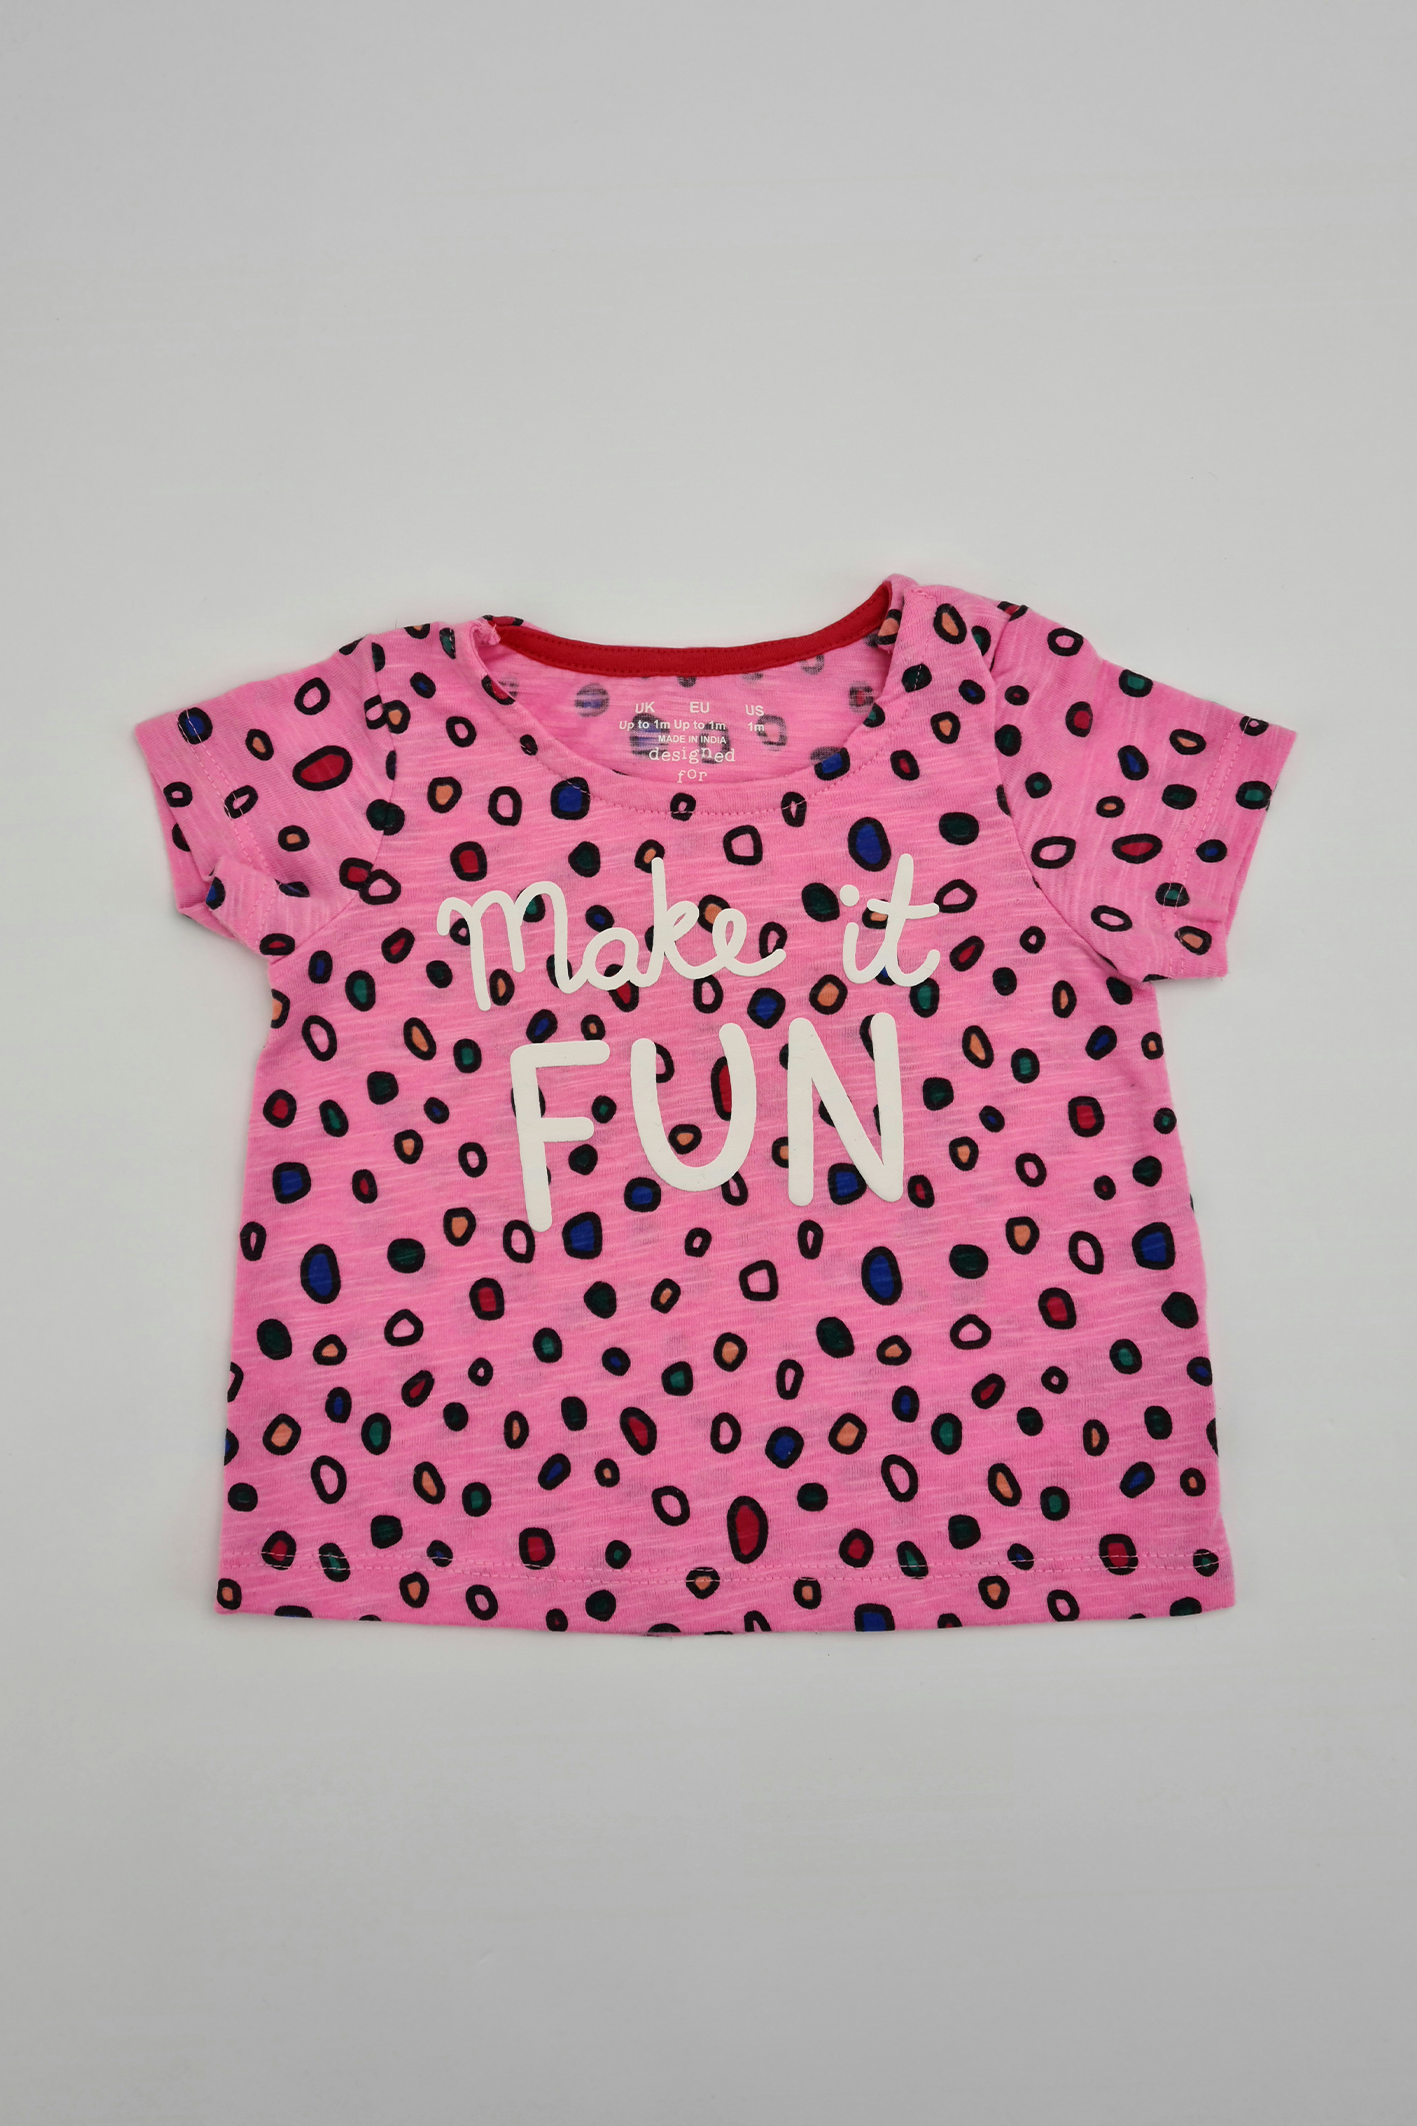 'Make It Fun' T-shirt - Precuddled.com